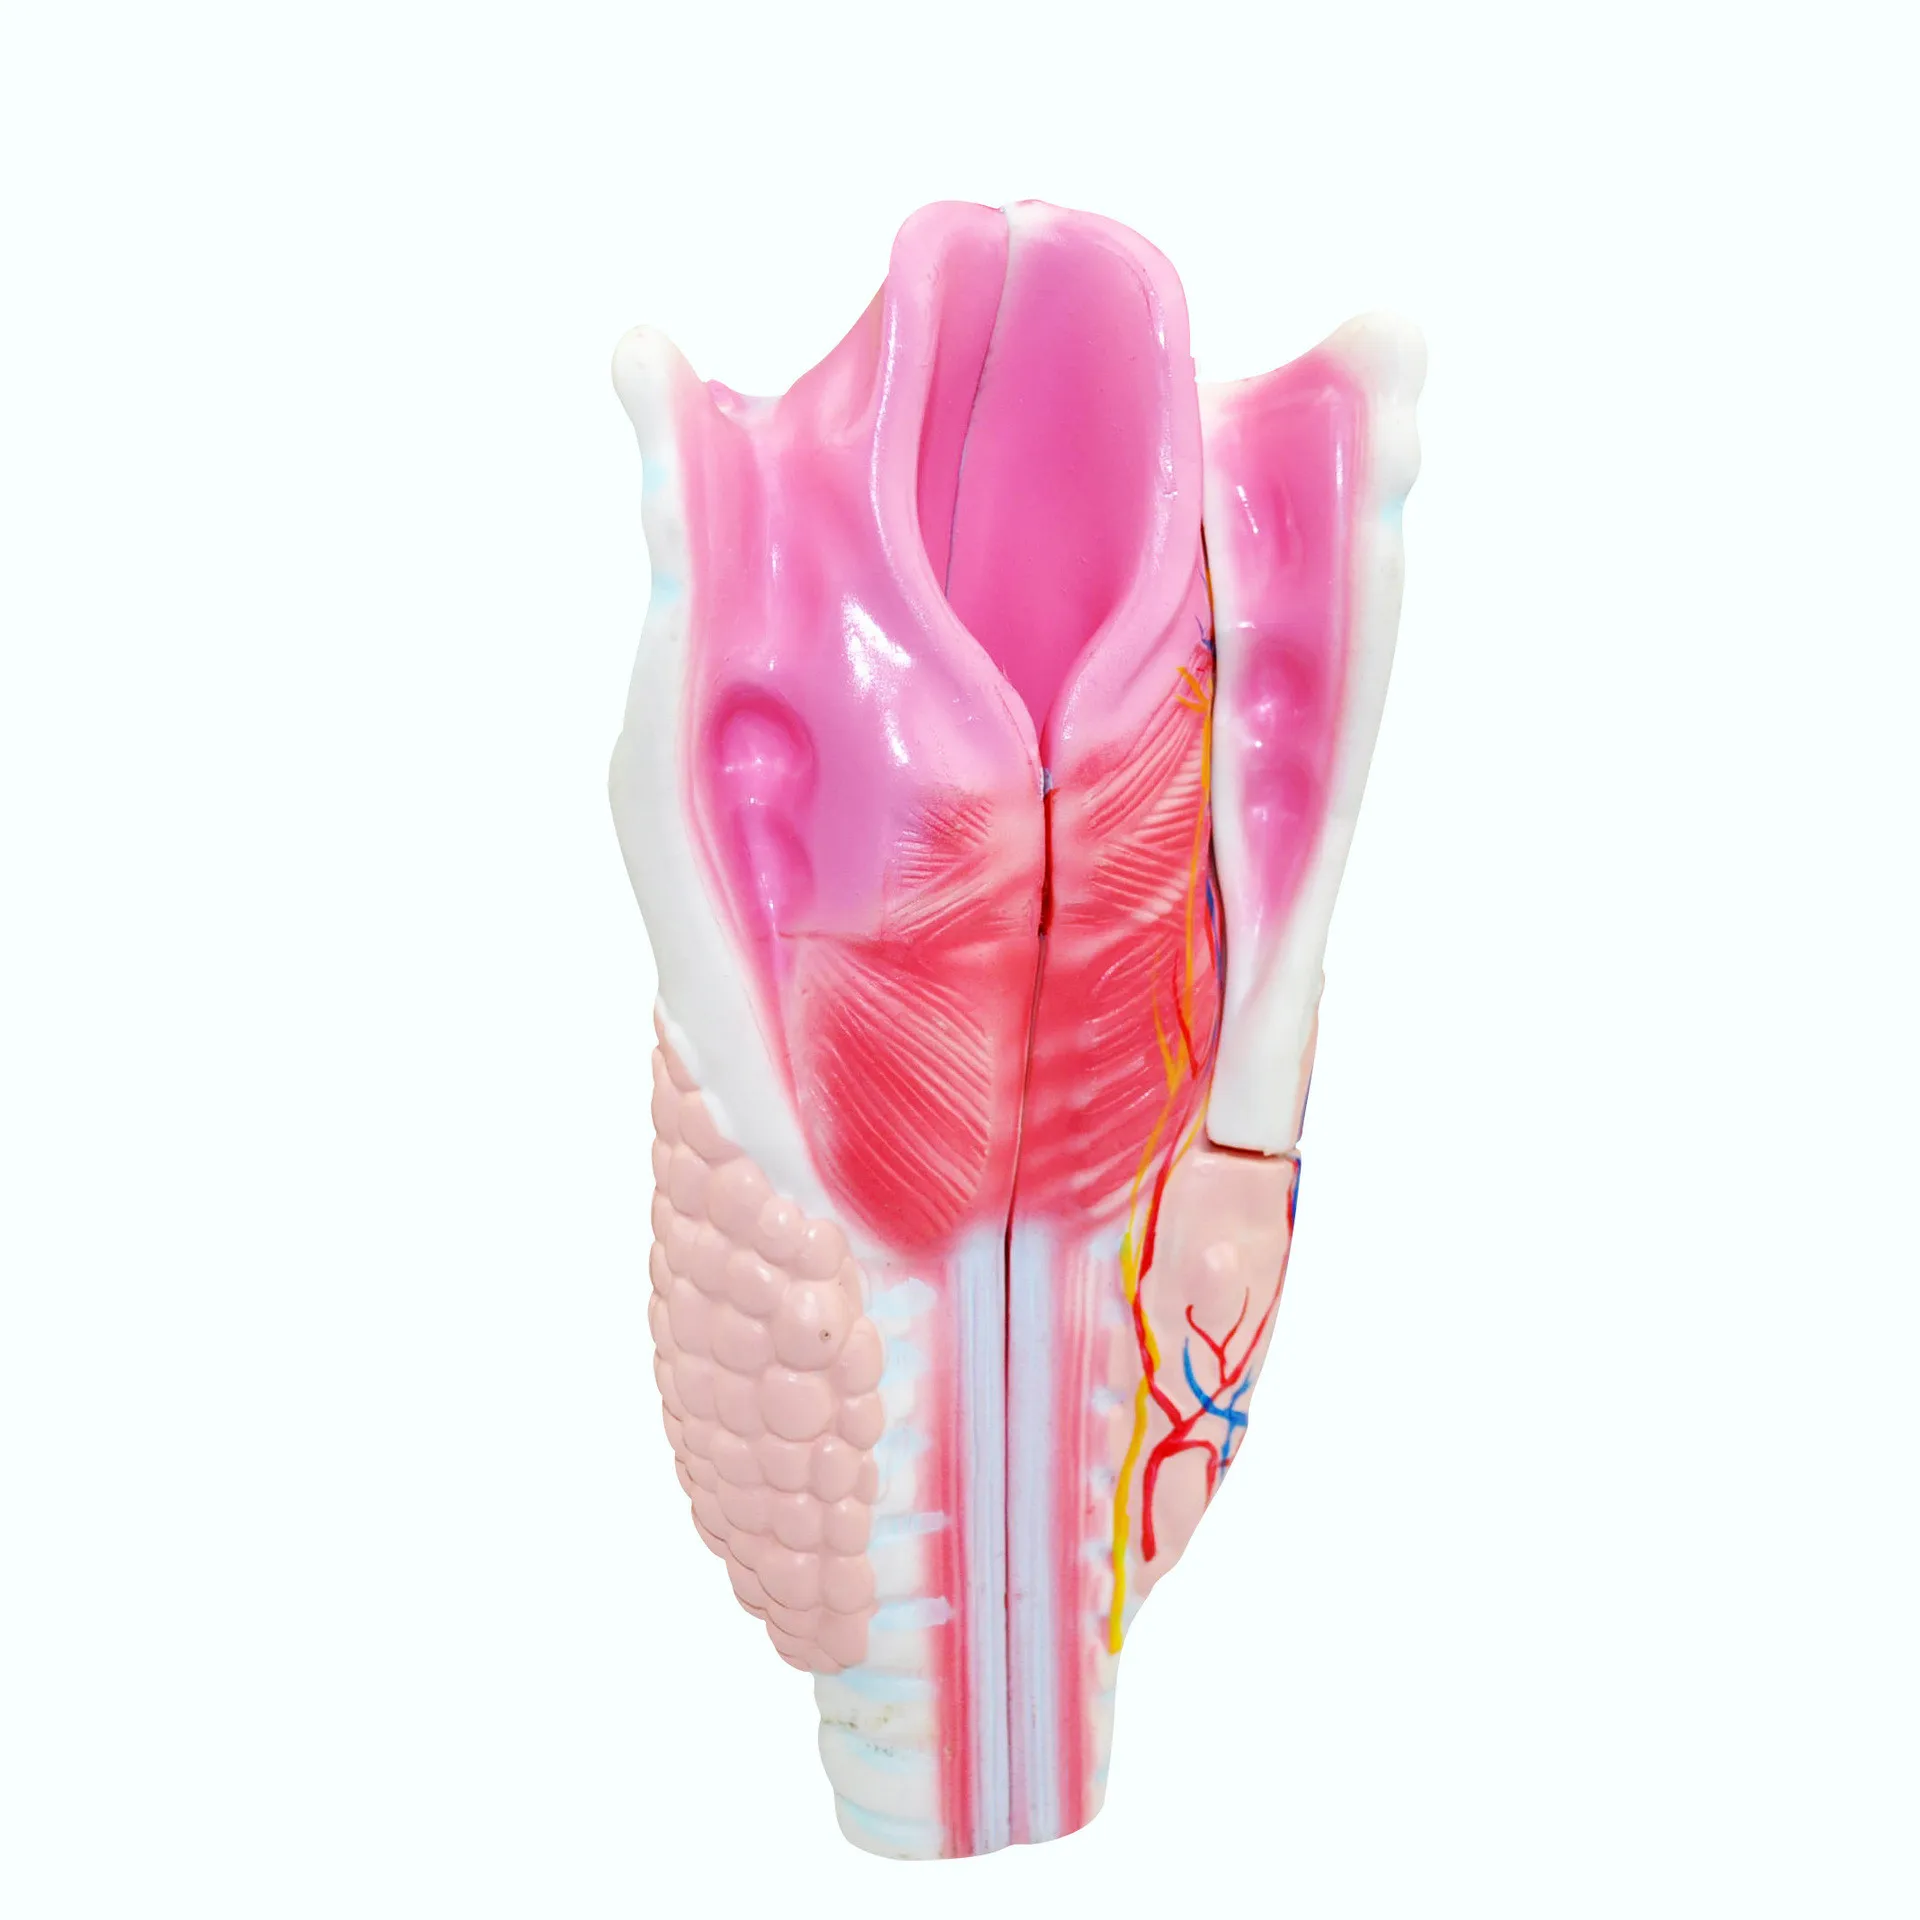 

Human Realistic Larynx Anatomical Model Human Respiratory Tract Anatomy Medical Teaching Aids Educational Equipment Supplies